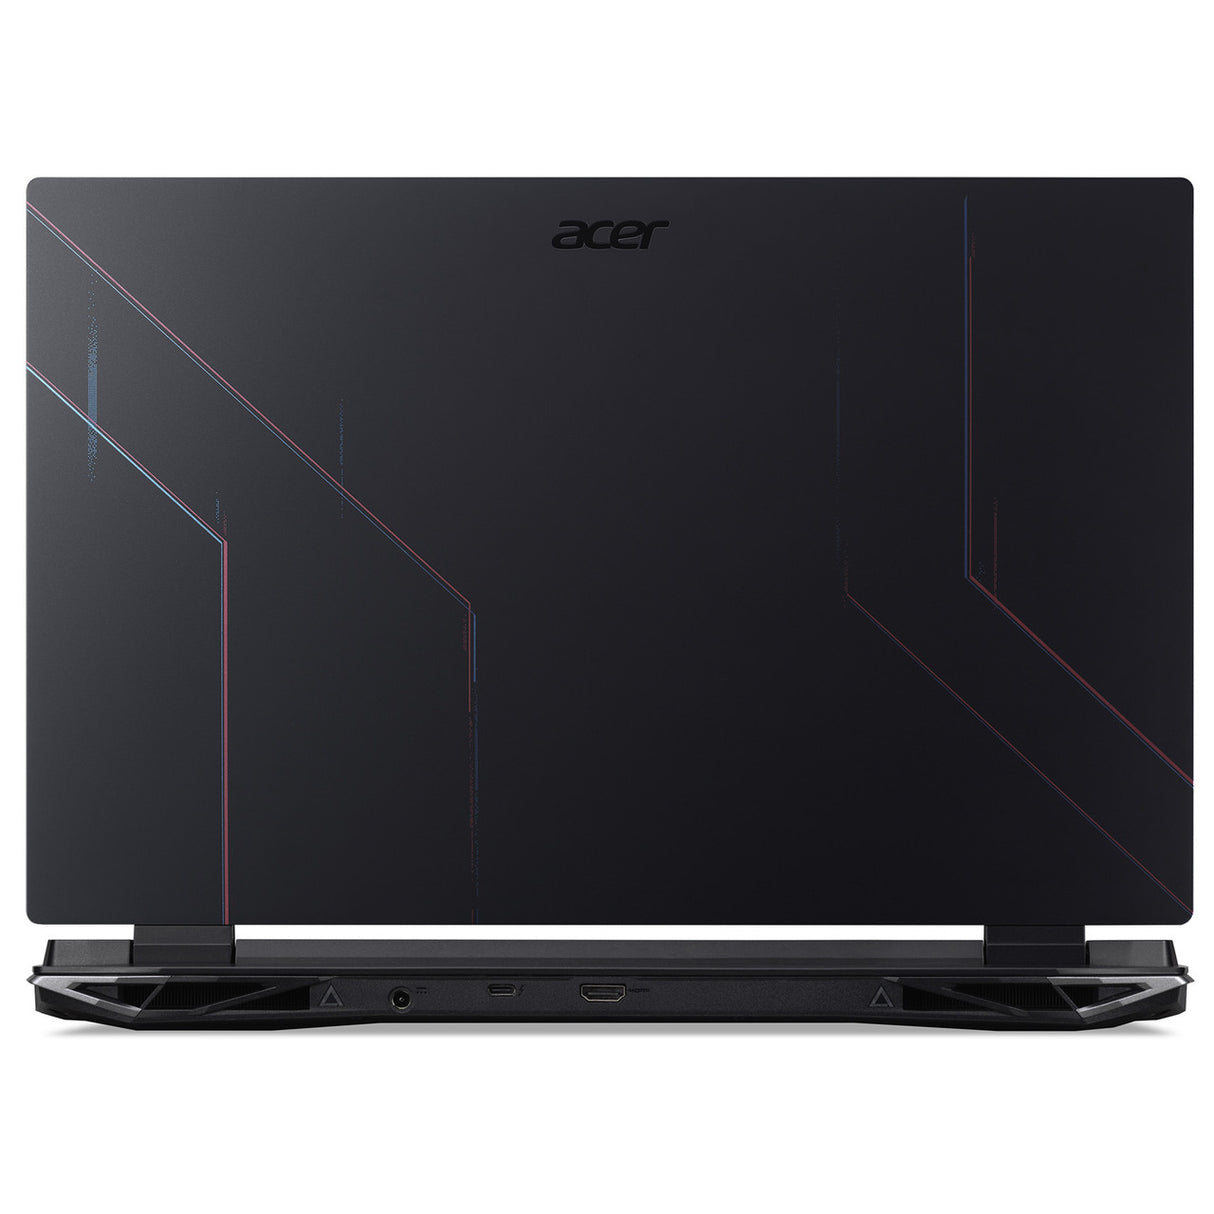 Laptop 15.6'' Gamer Acer Nitro 5 AN515-44-R5VY Full HD, AMD Ryzen 5 4600H 3GHz, 8GB, 1TB + 256GB SSD, NVIDIA GeForce GTX 1650, Windows 10 Home 64-bit, Español, Negro - NH.Q9GAL.00S